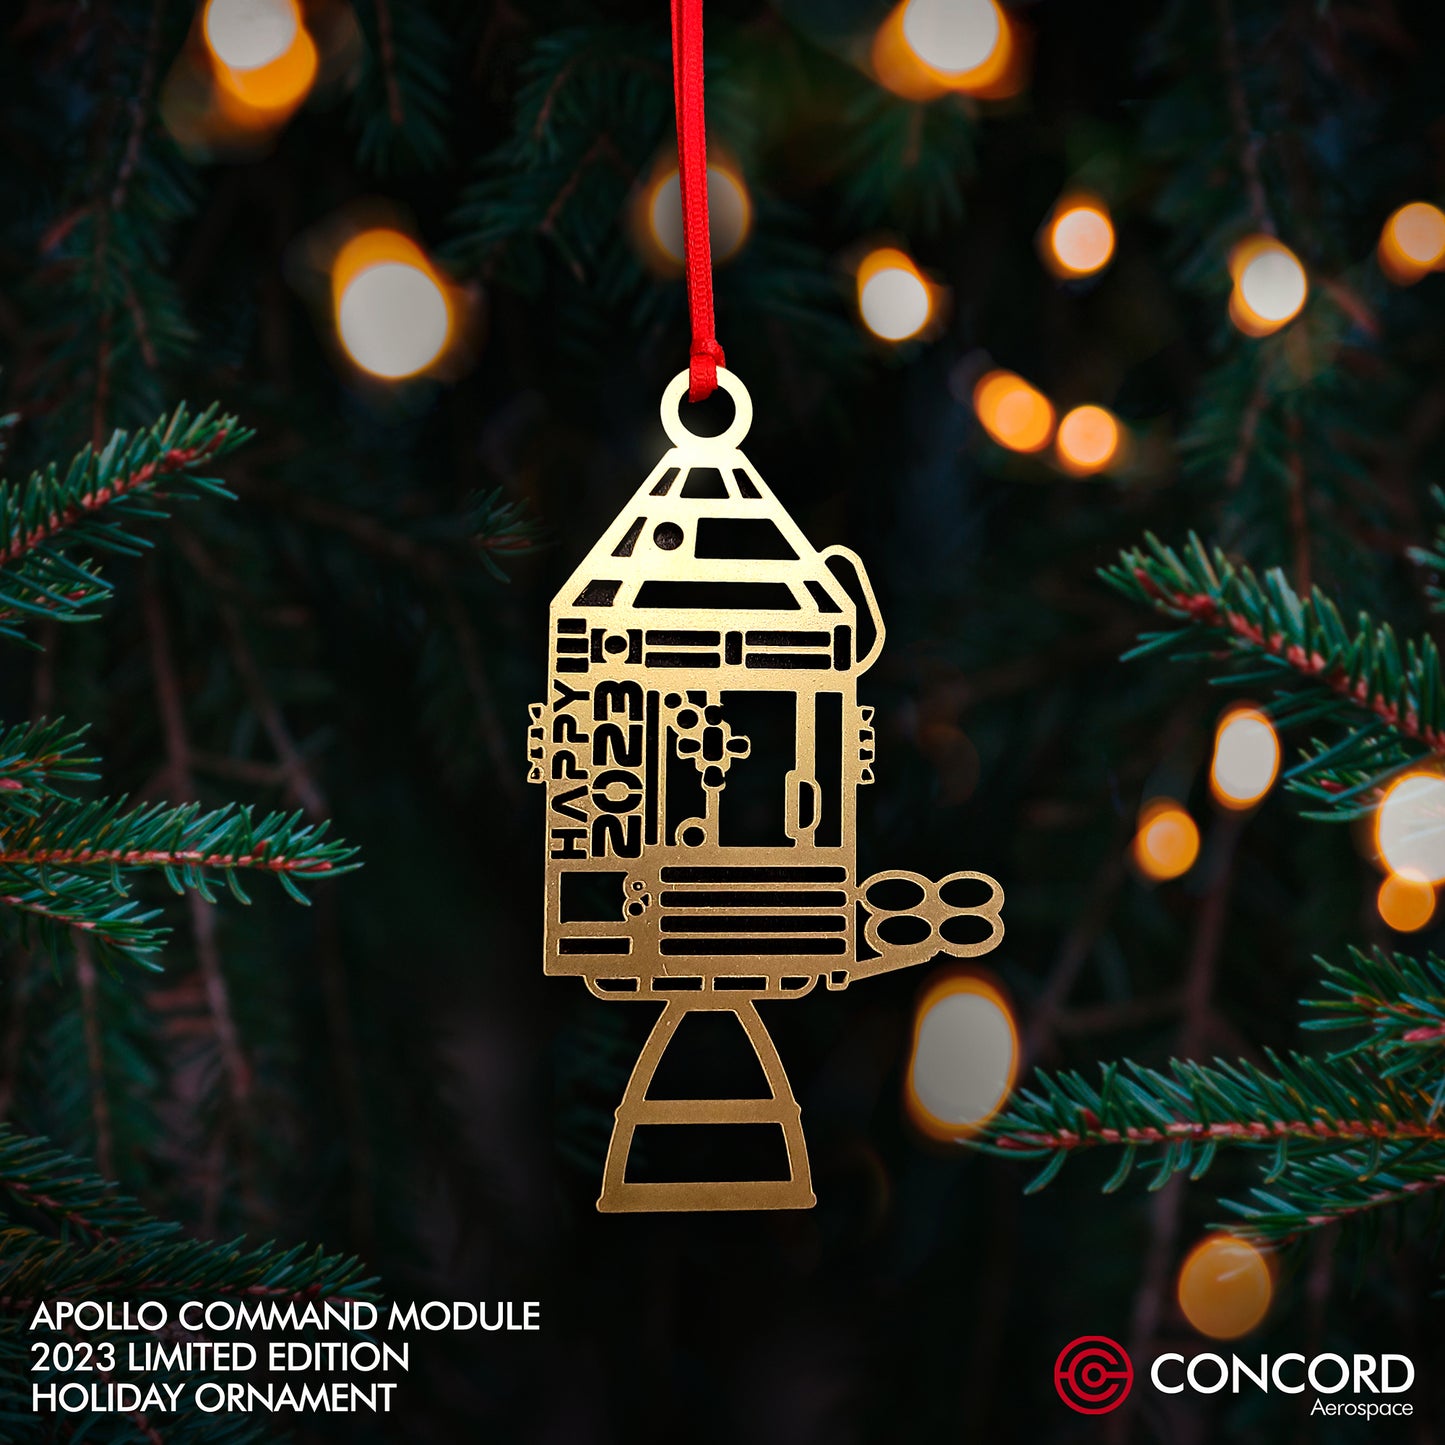 APOLLO COMMAND MODULE 2023 LIMITED EDITION TREE ORNAMENT - Concord Aerospace Concord Aerospace Concord Aerospace Holiday Ornament